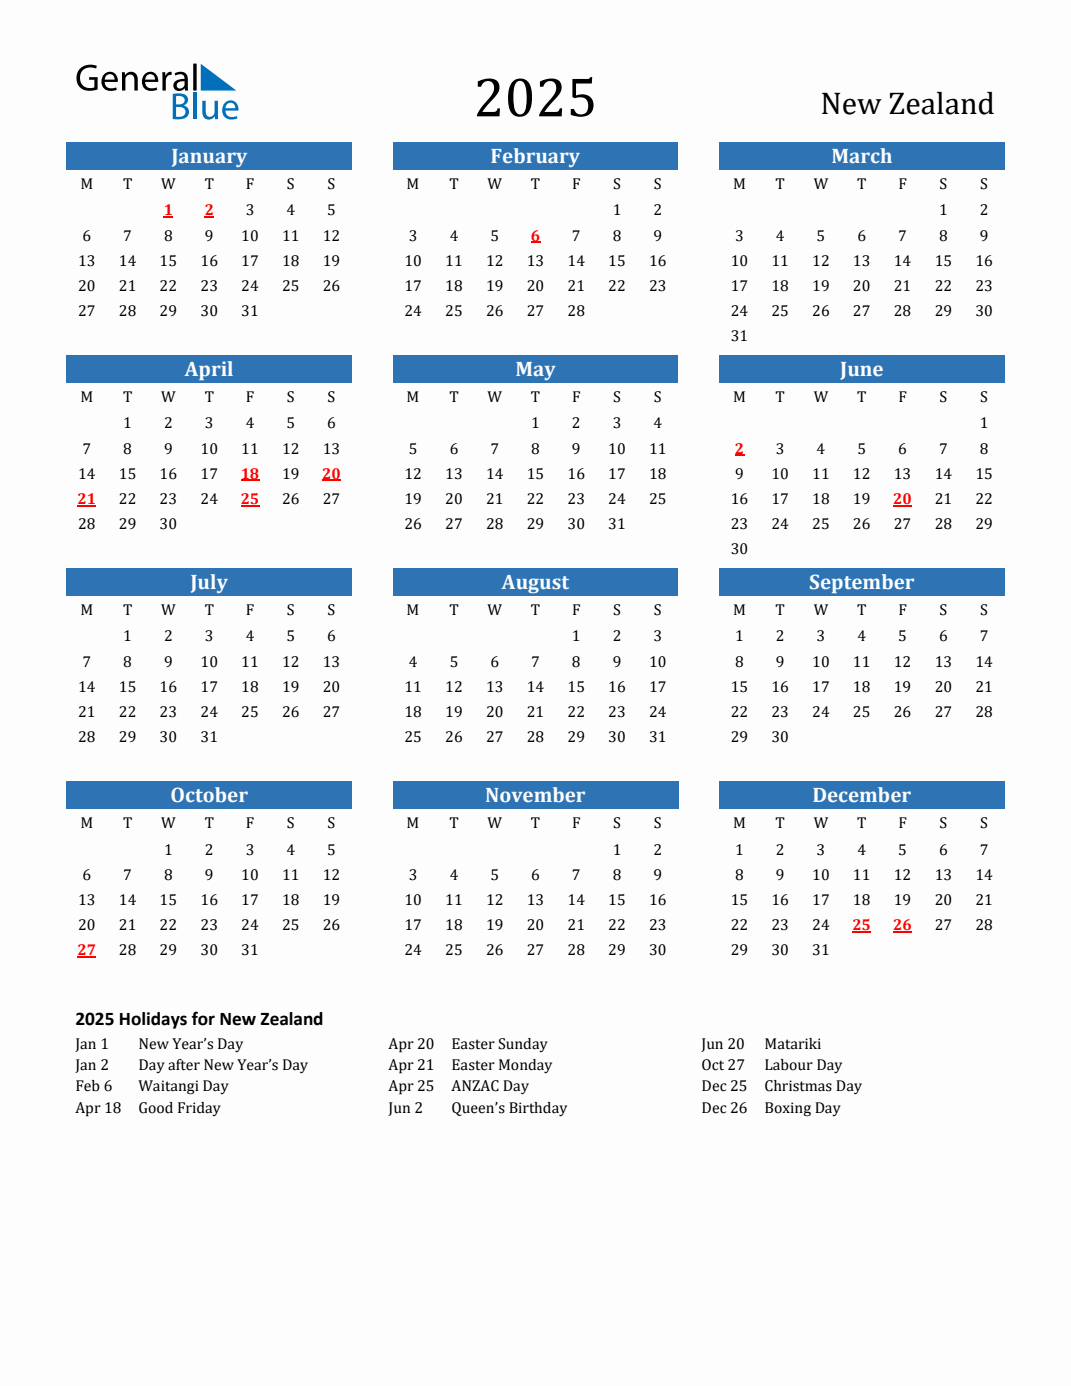 2025-holiday-calendar-for-new-zealand-monday-start